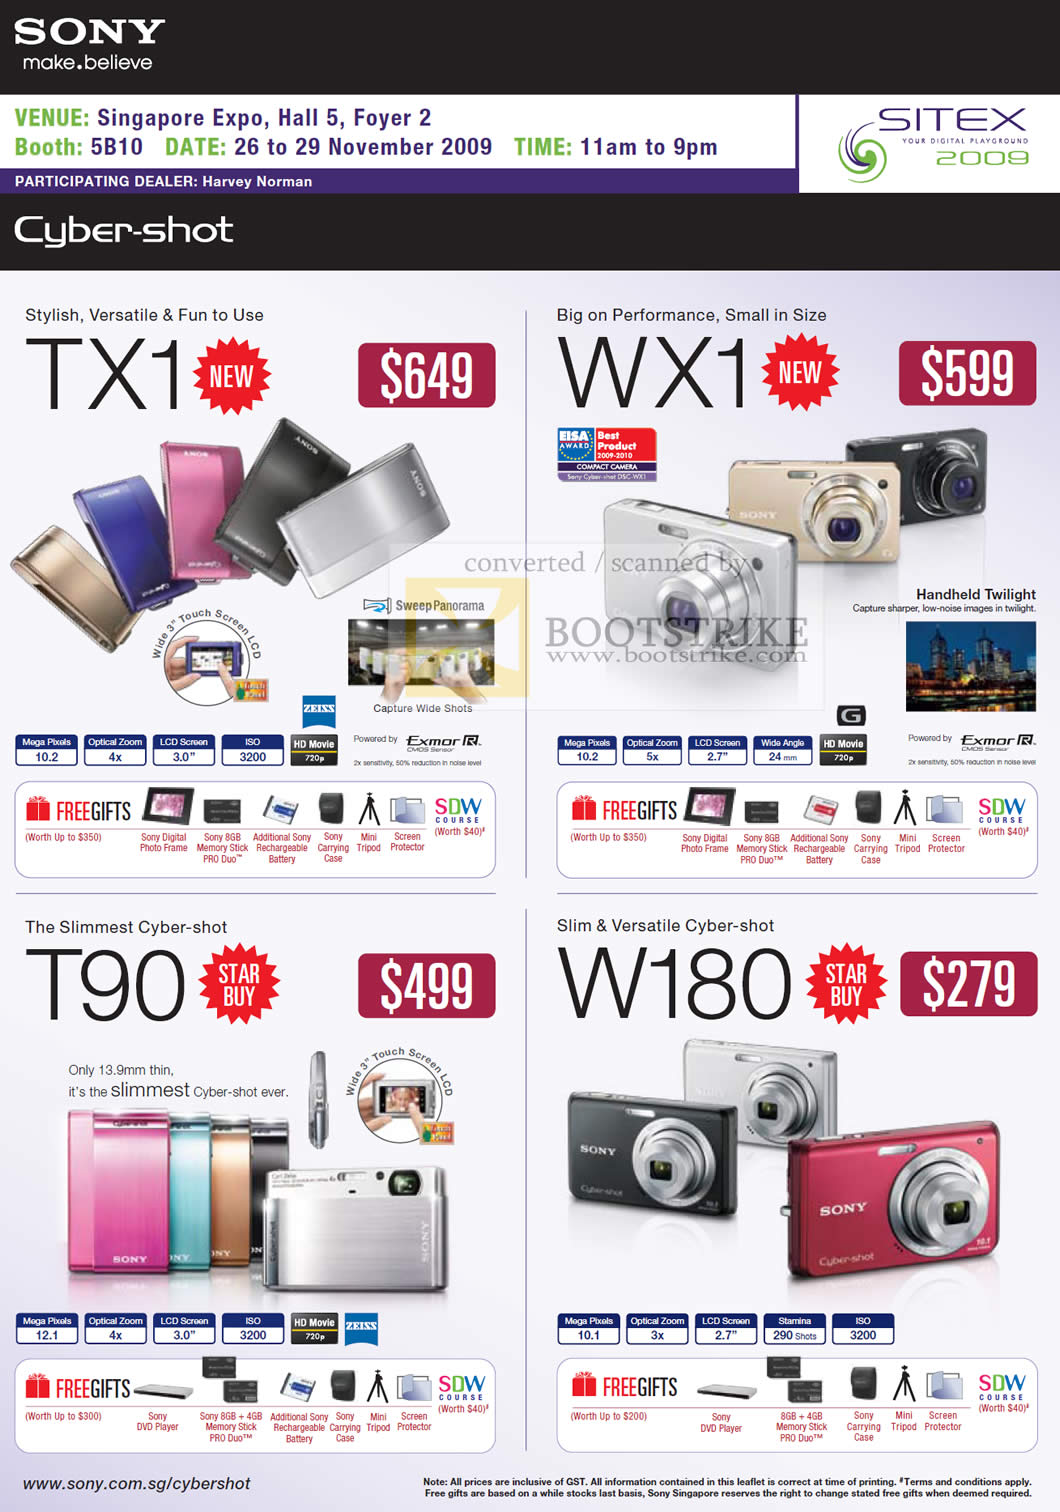 Sitex 2009 price list image brochure of Sony Cybershot Digital Cameras TX1 WX1 T90 W180